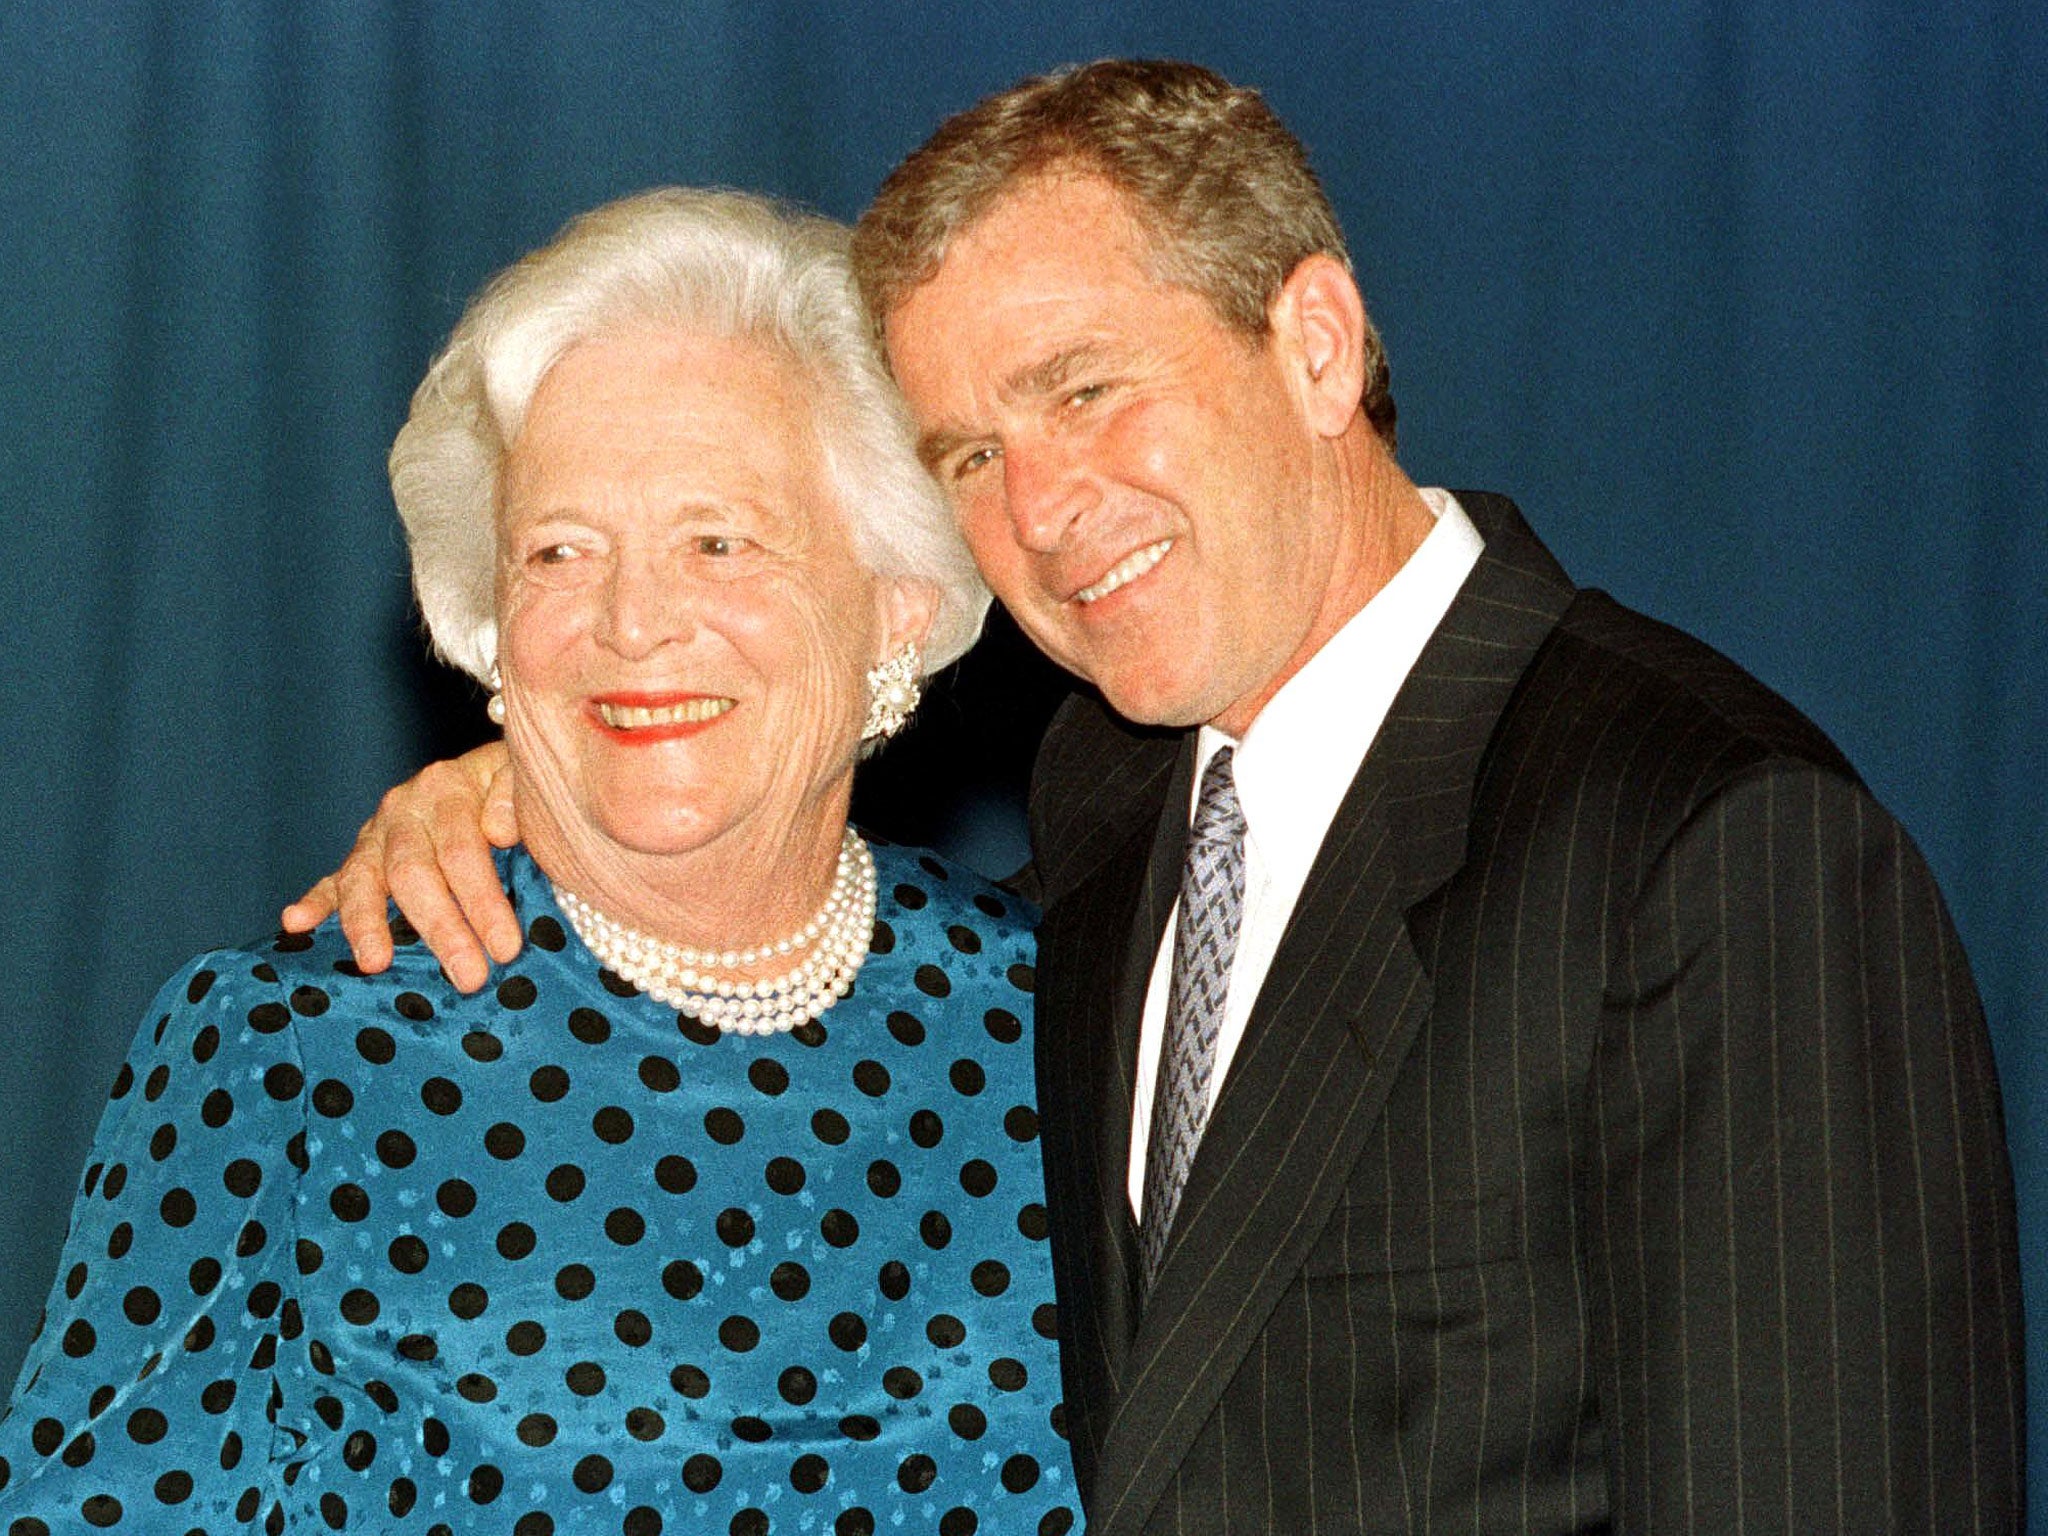 Barbara Bush poses next to former US President and son George W Bush